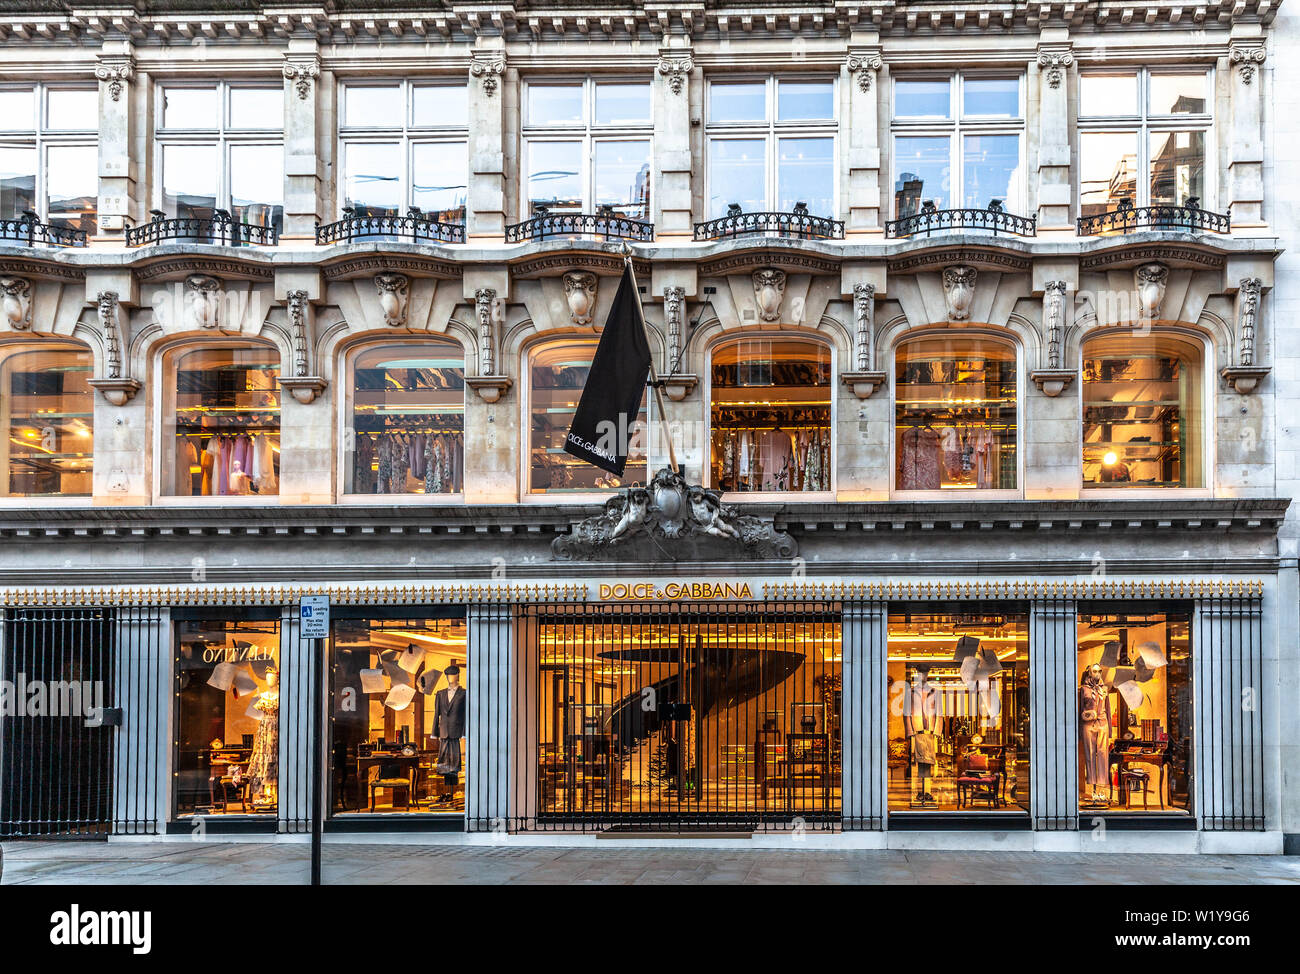 Dolce & Gabbana fashion store, 53-55 New Bond Street, Mayfair, London W1S 1DG, Angleterre, Royaume-Uni. Banque D'Images